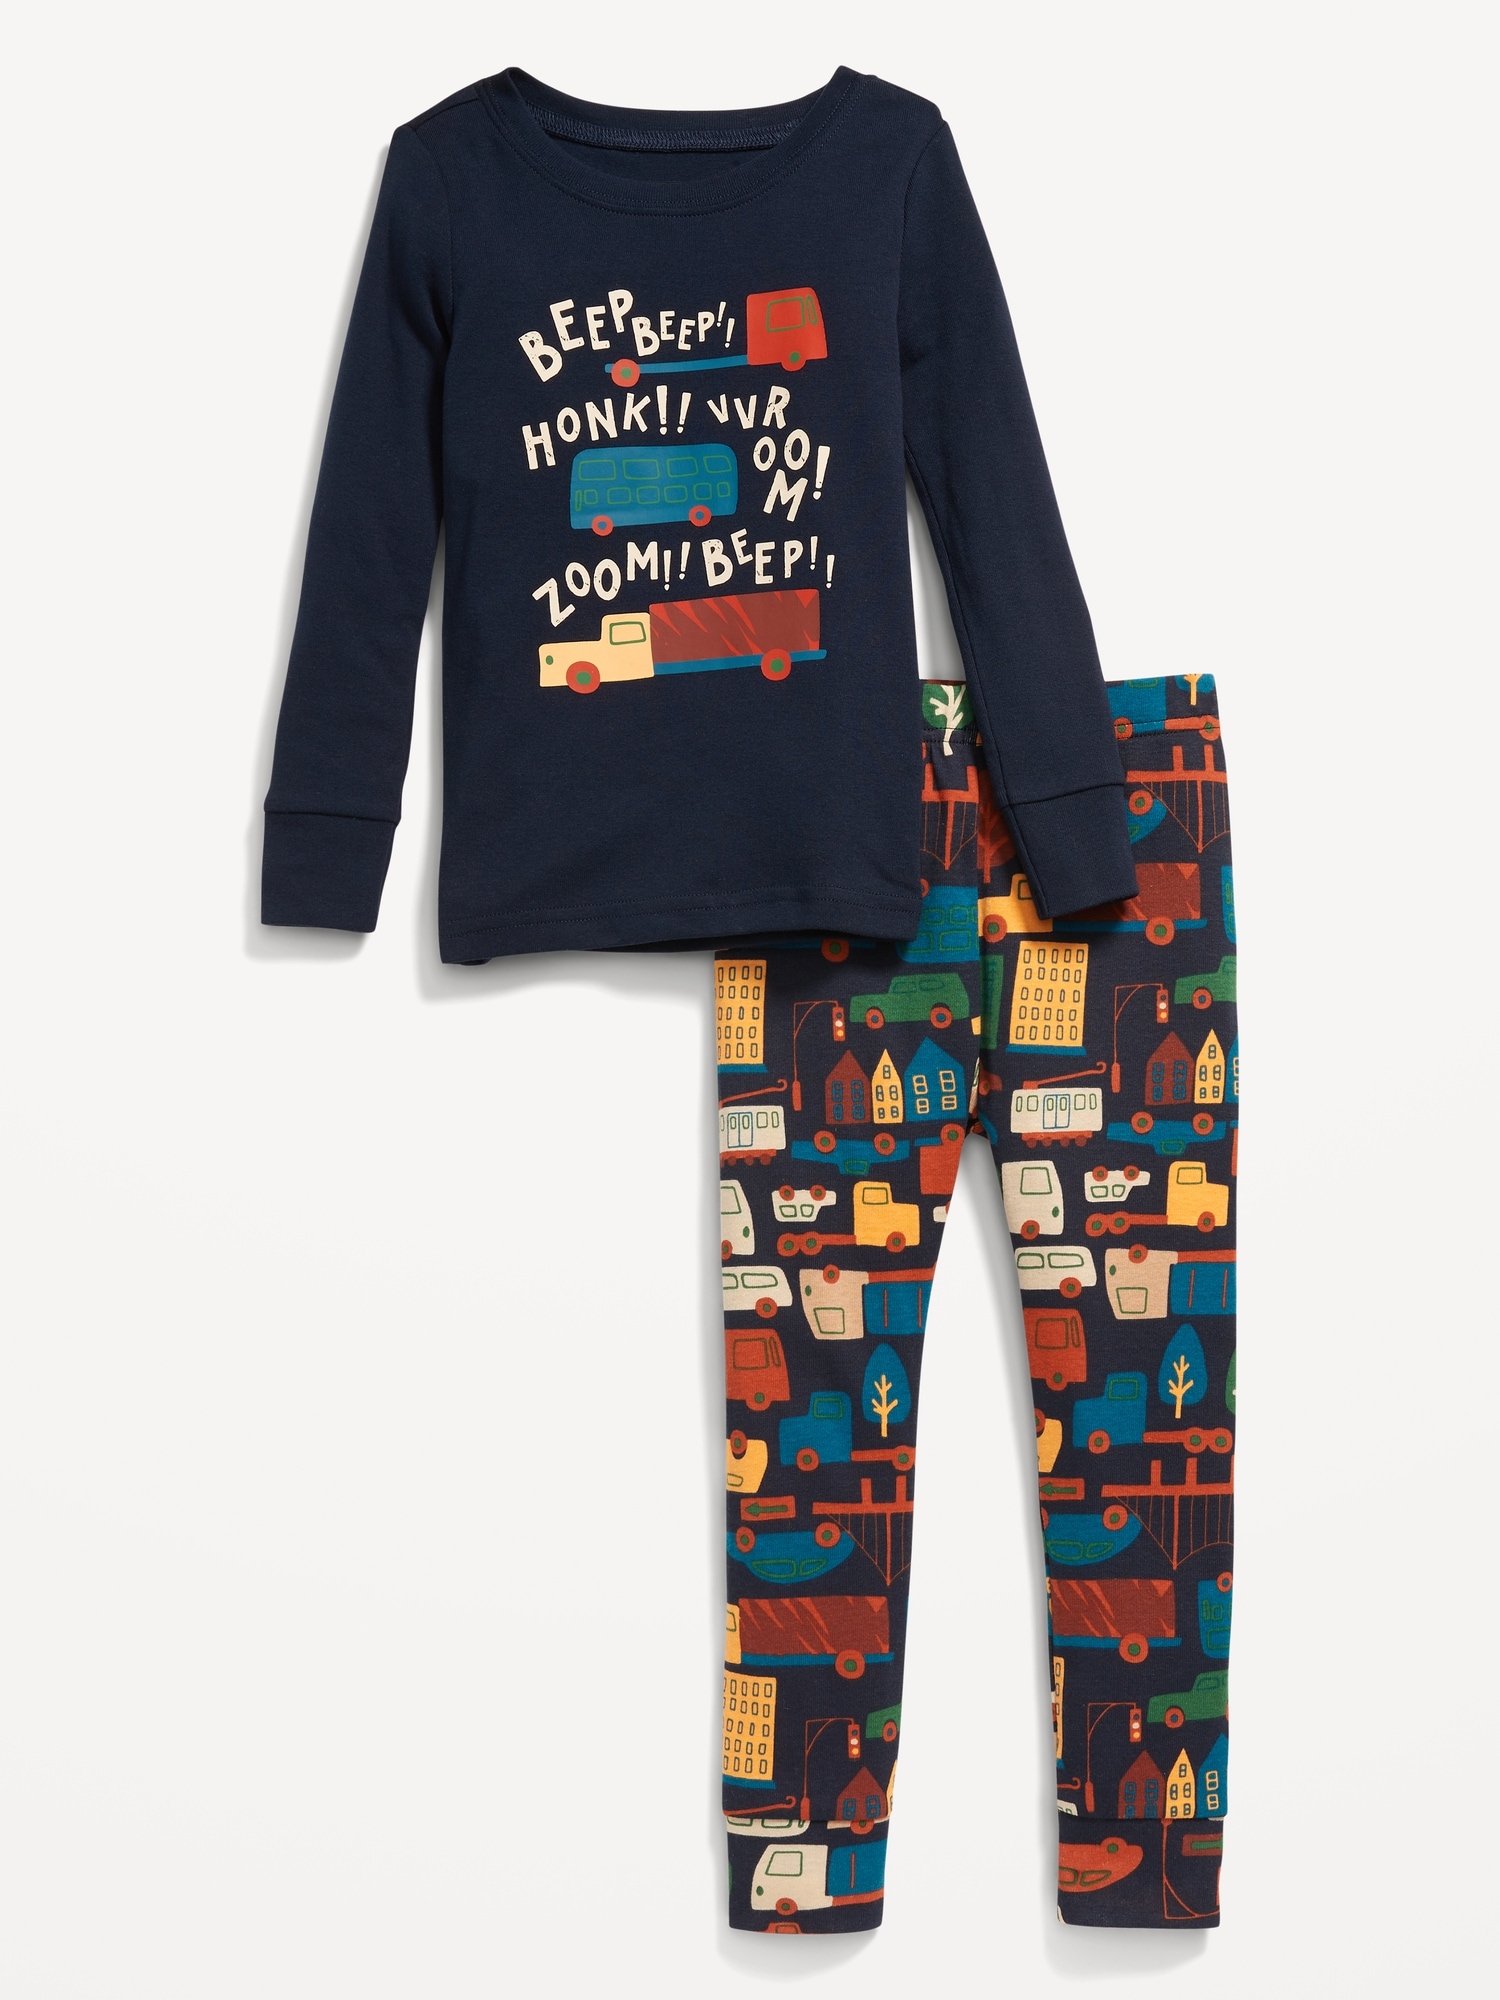 Rib Knit Kids Pajamas 1 to 12 Years, Baby Knit Pajama Set, Toddler